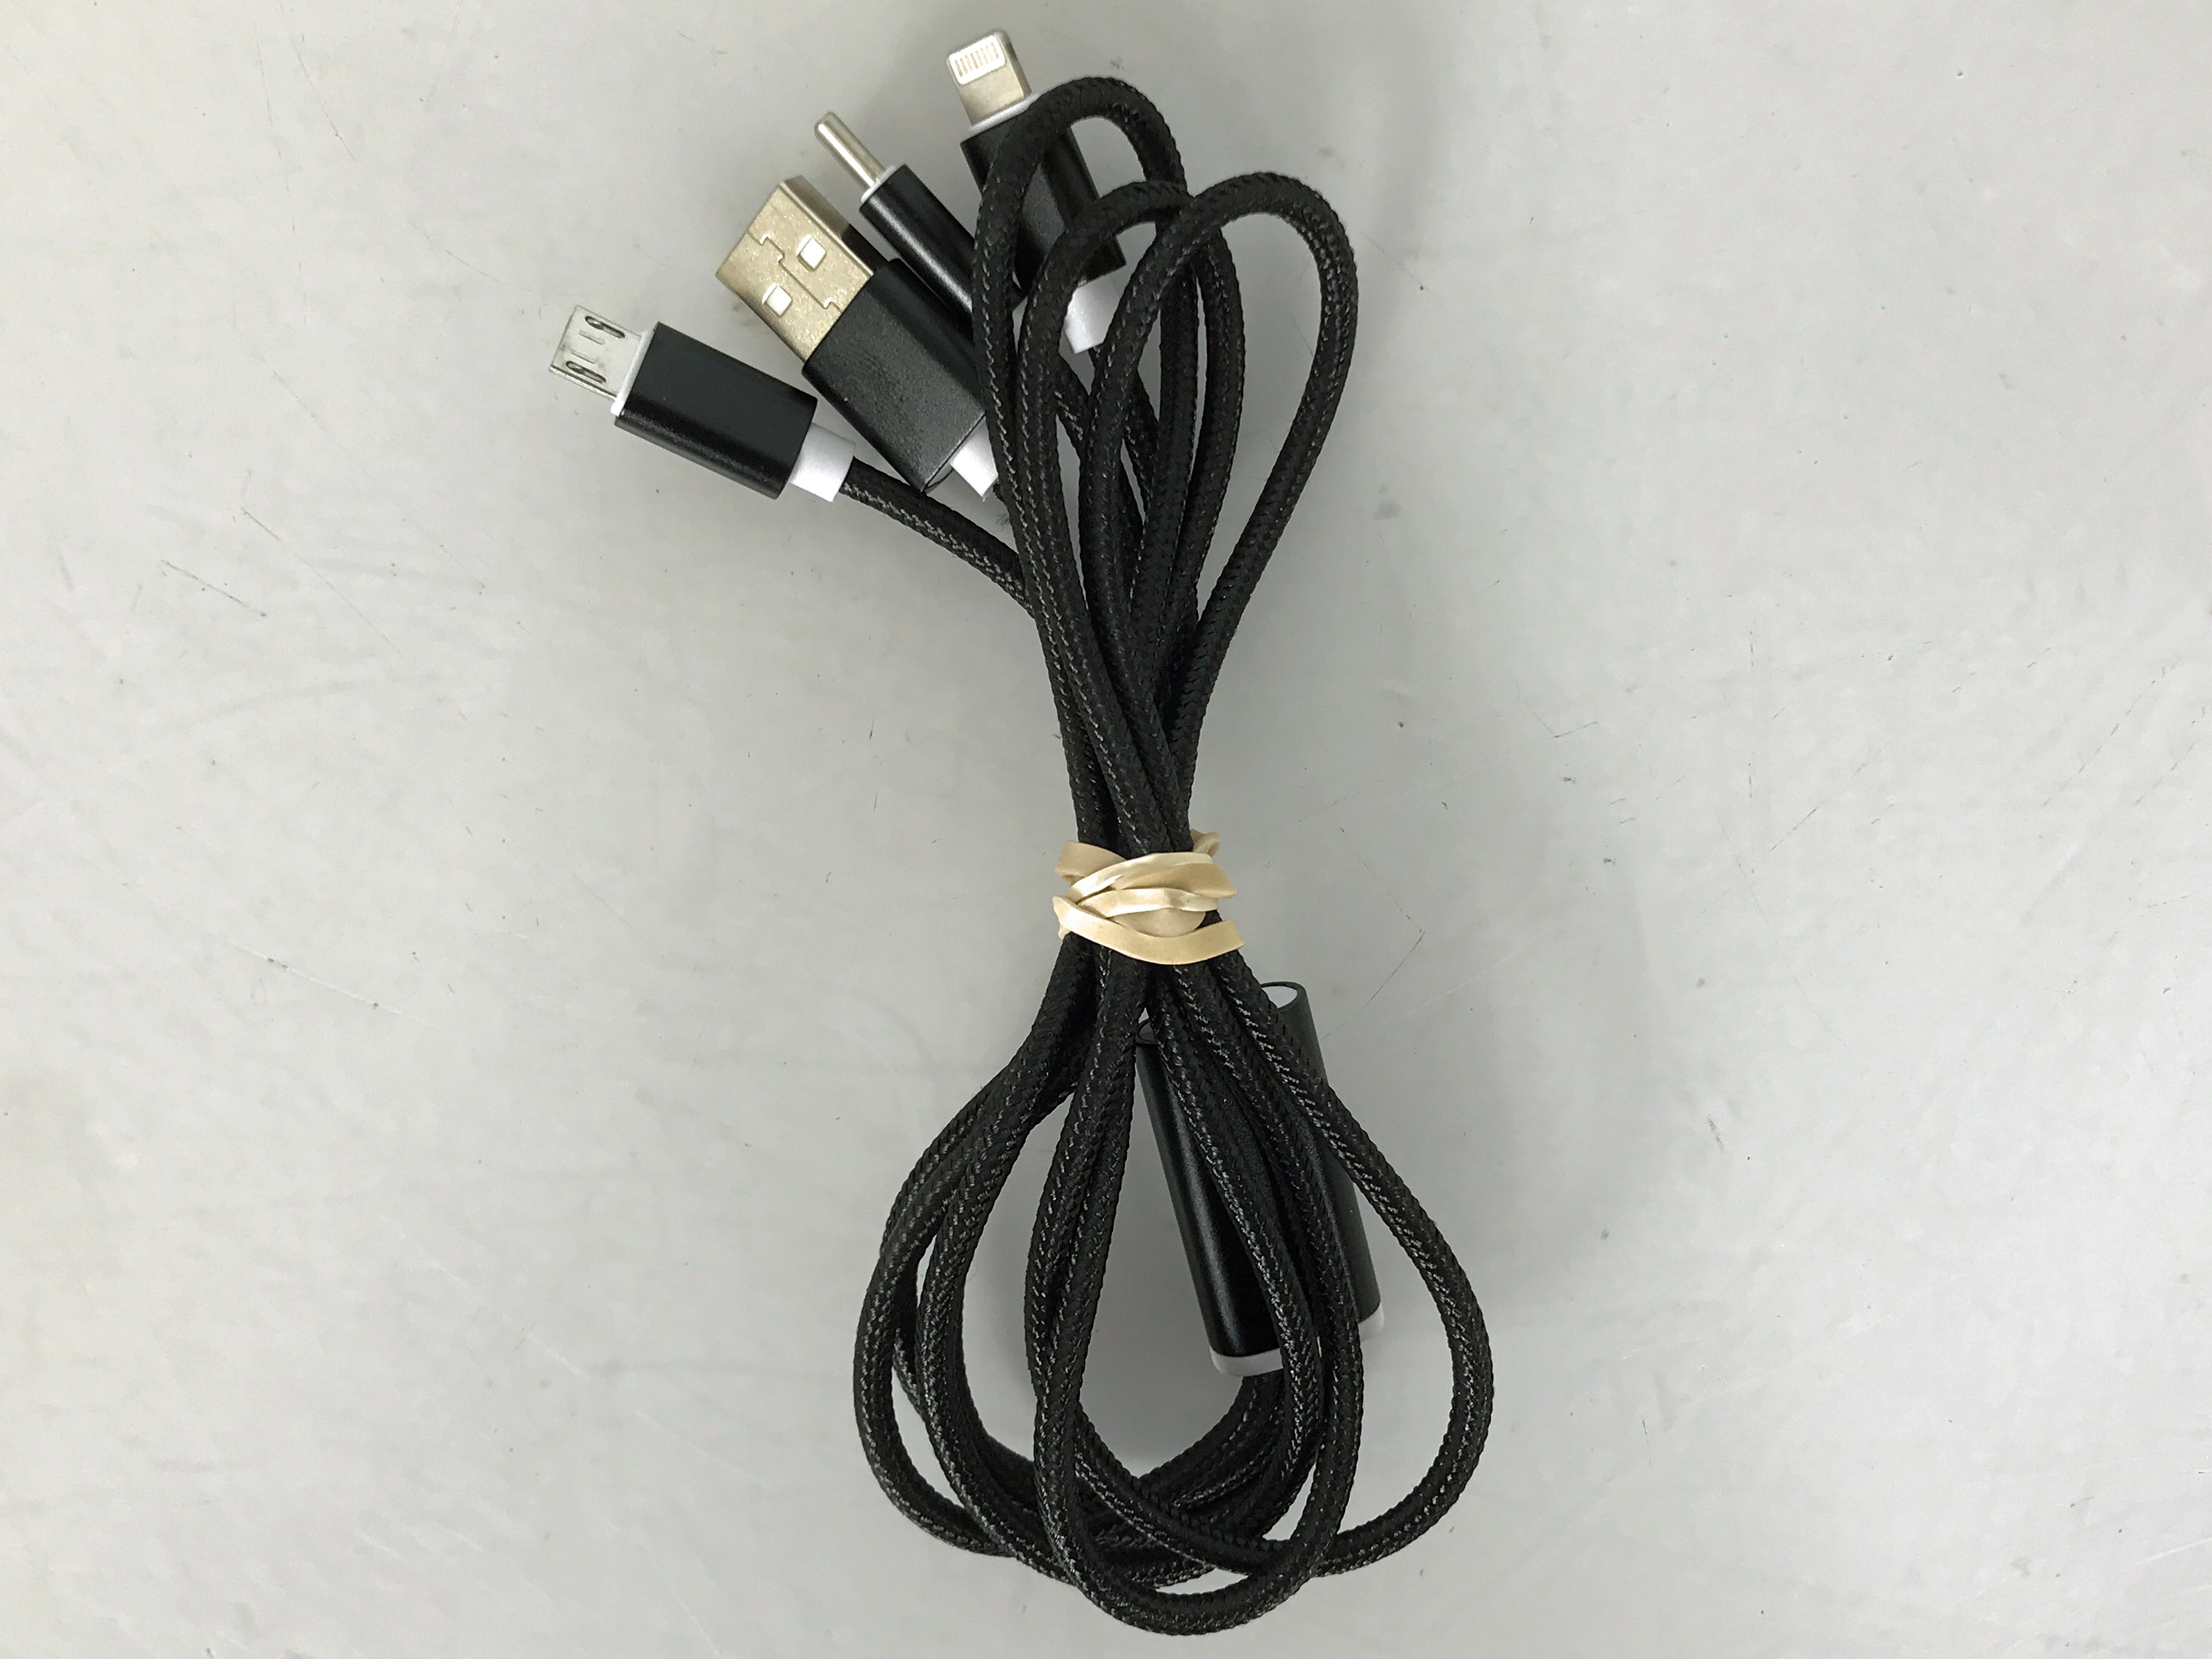 Generic USB to USB-C, Lightning, Micro USB Adapter Cable